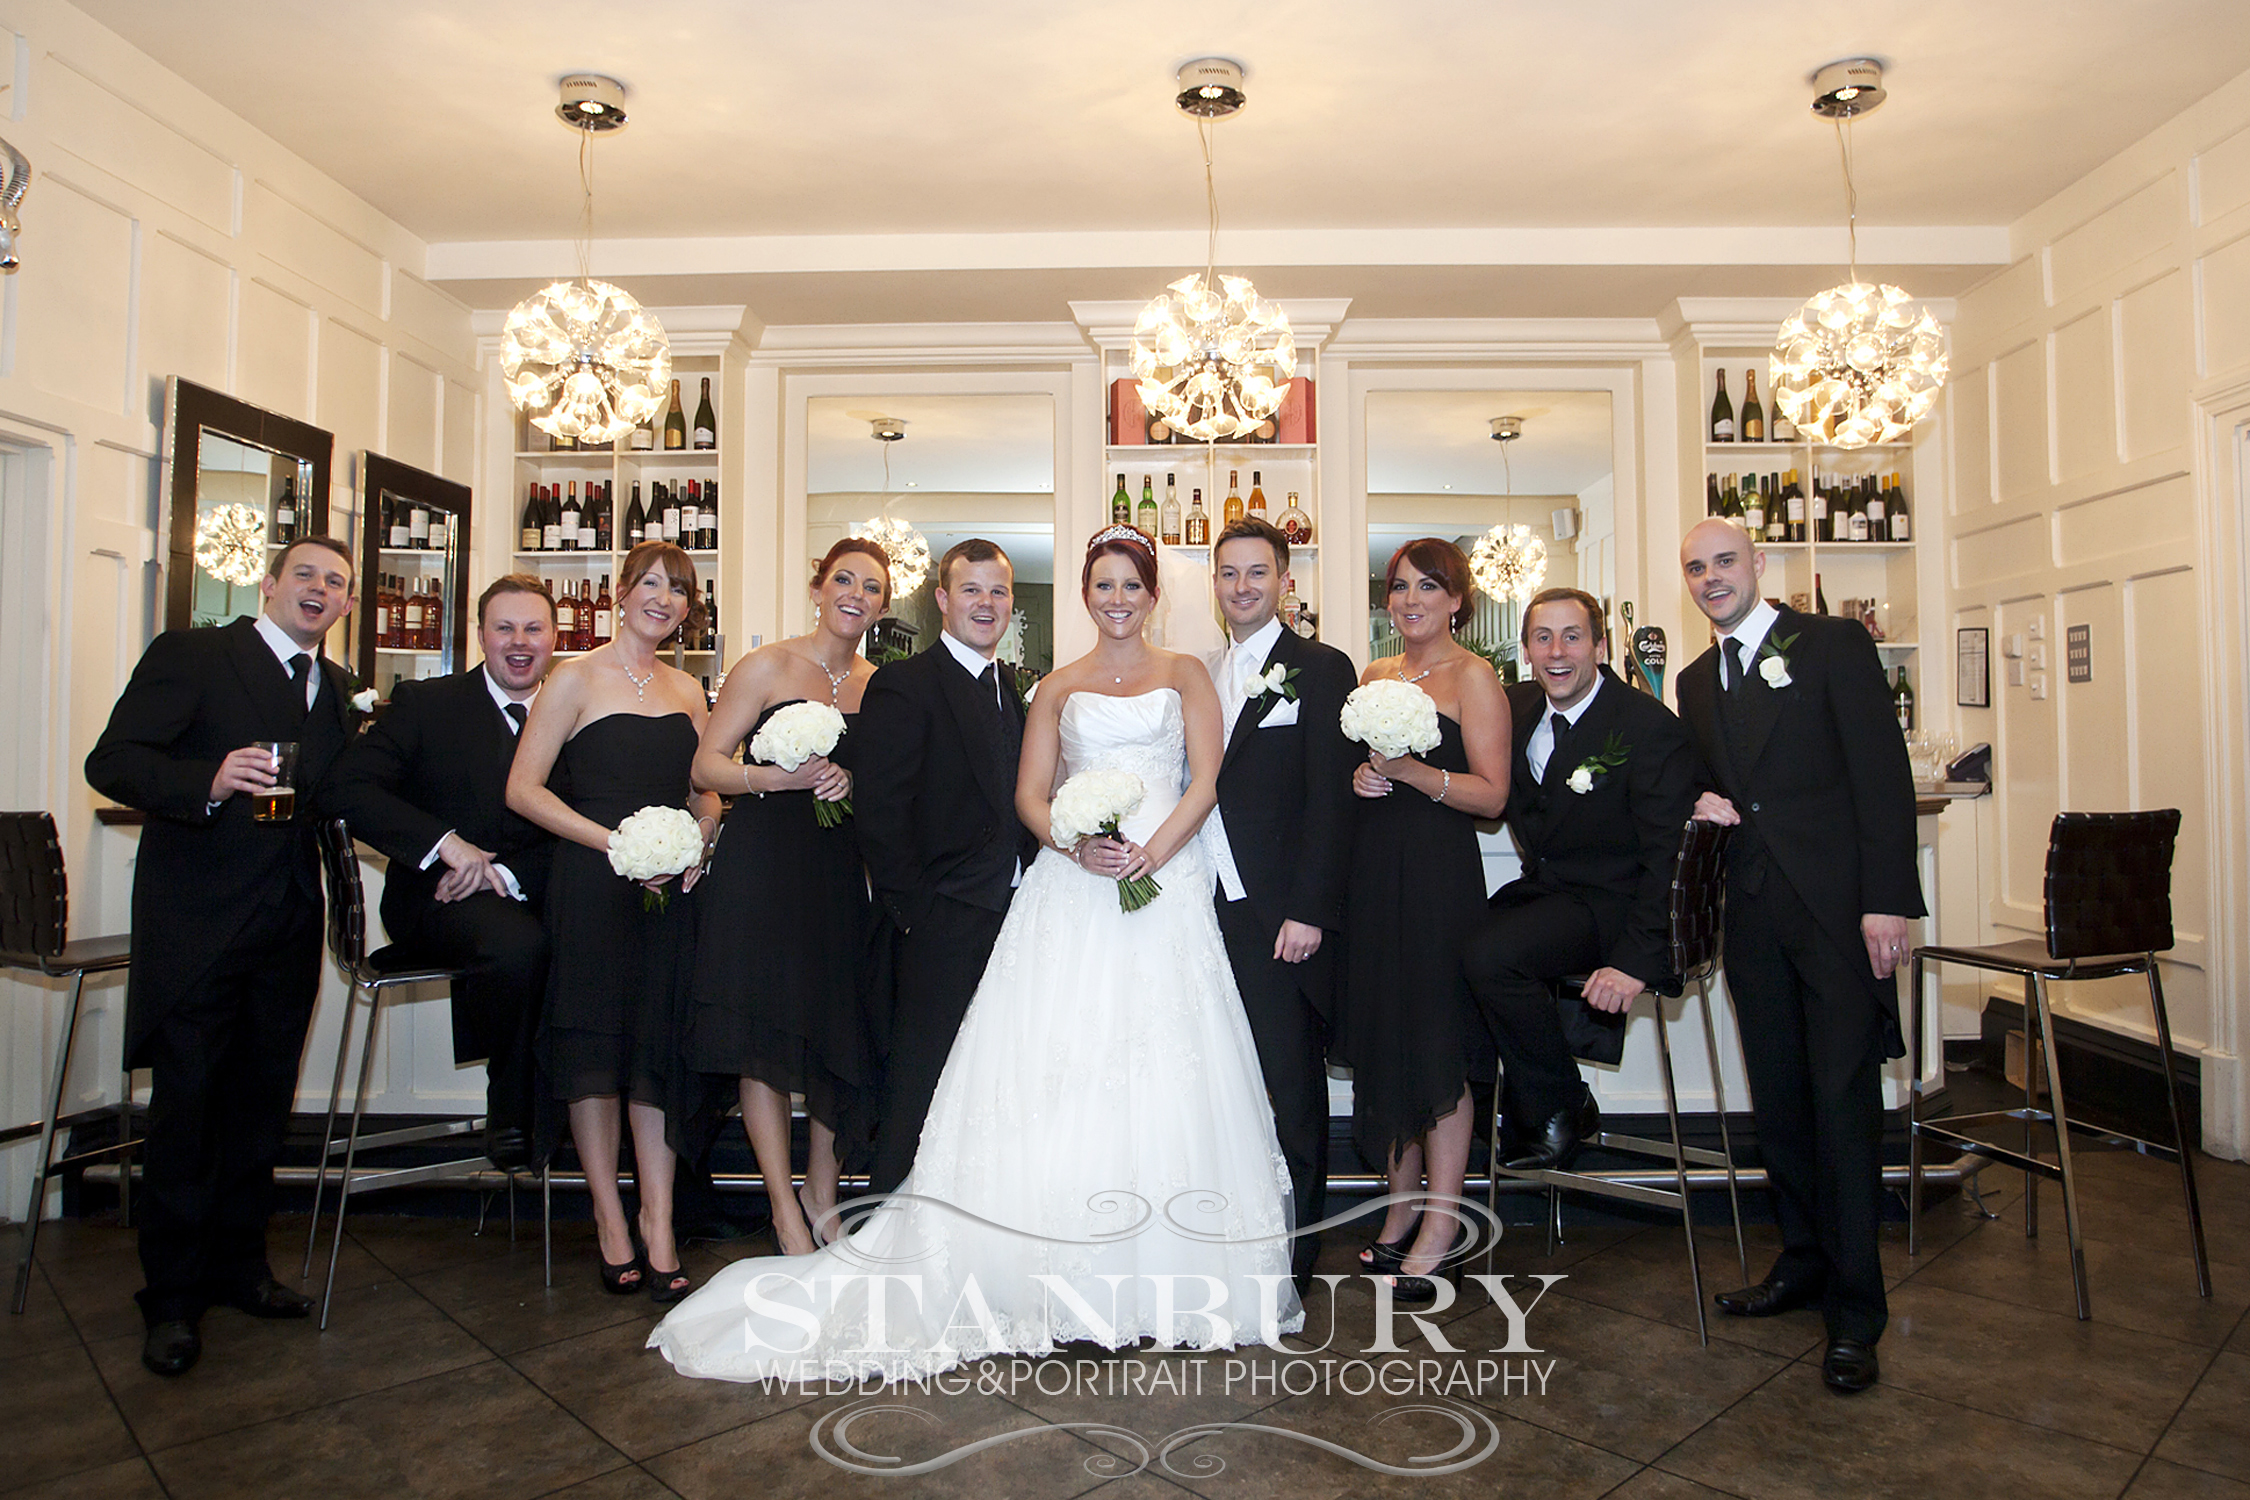 wedding photography at mitton hall by stanbury studio.com